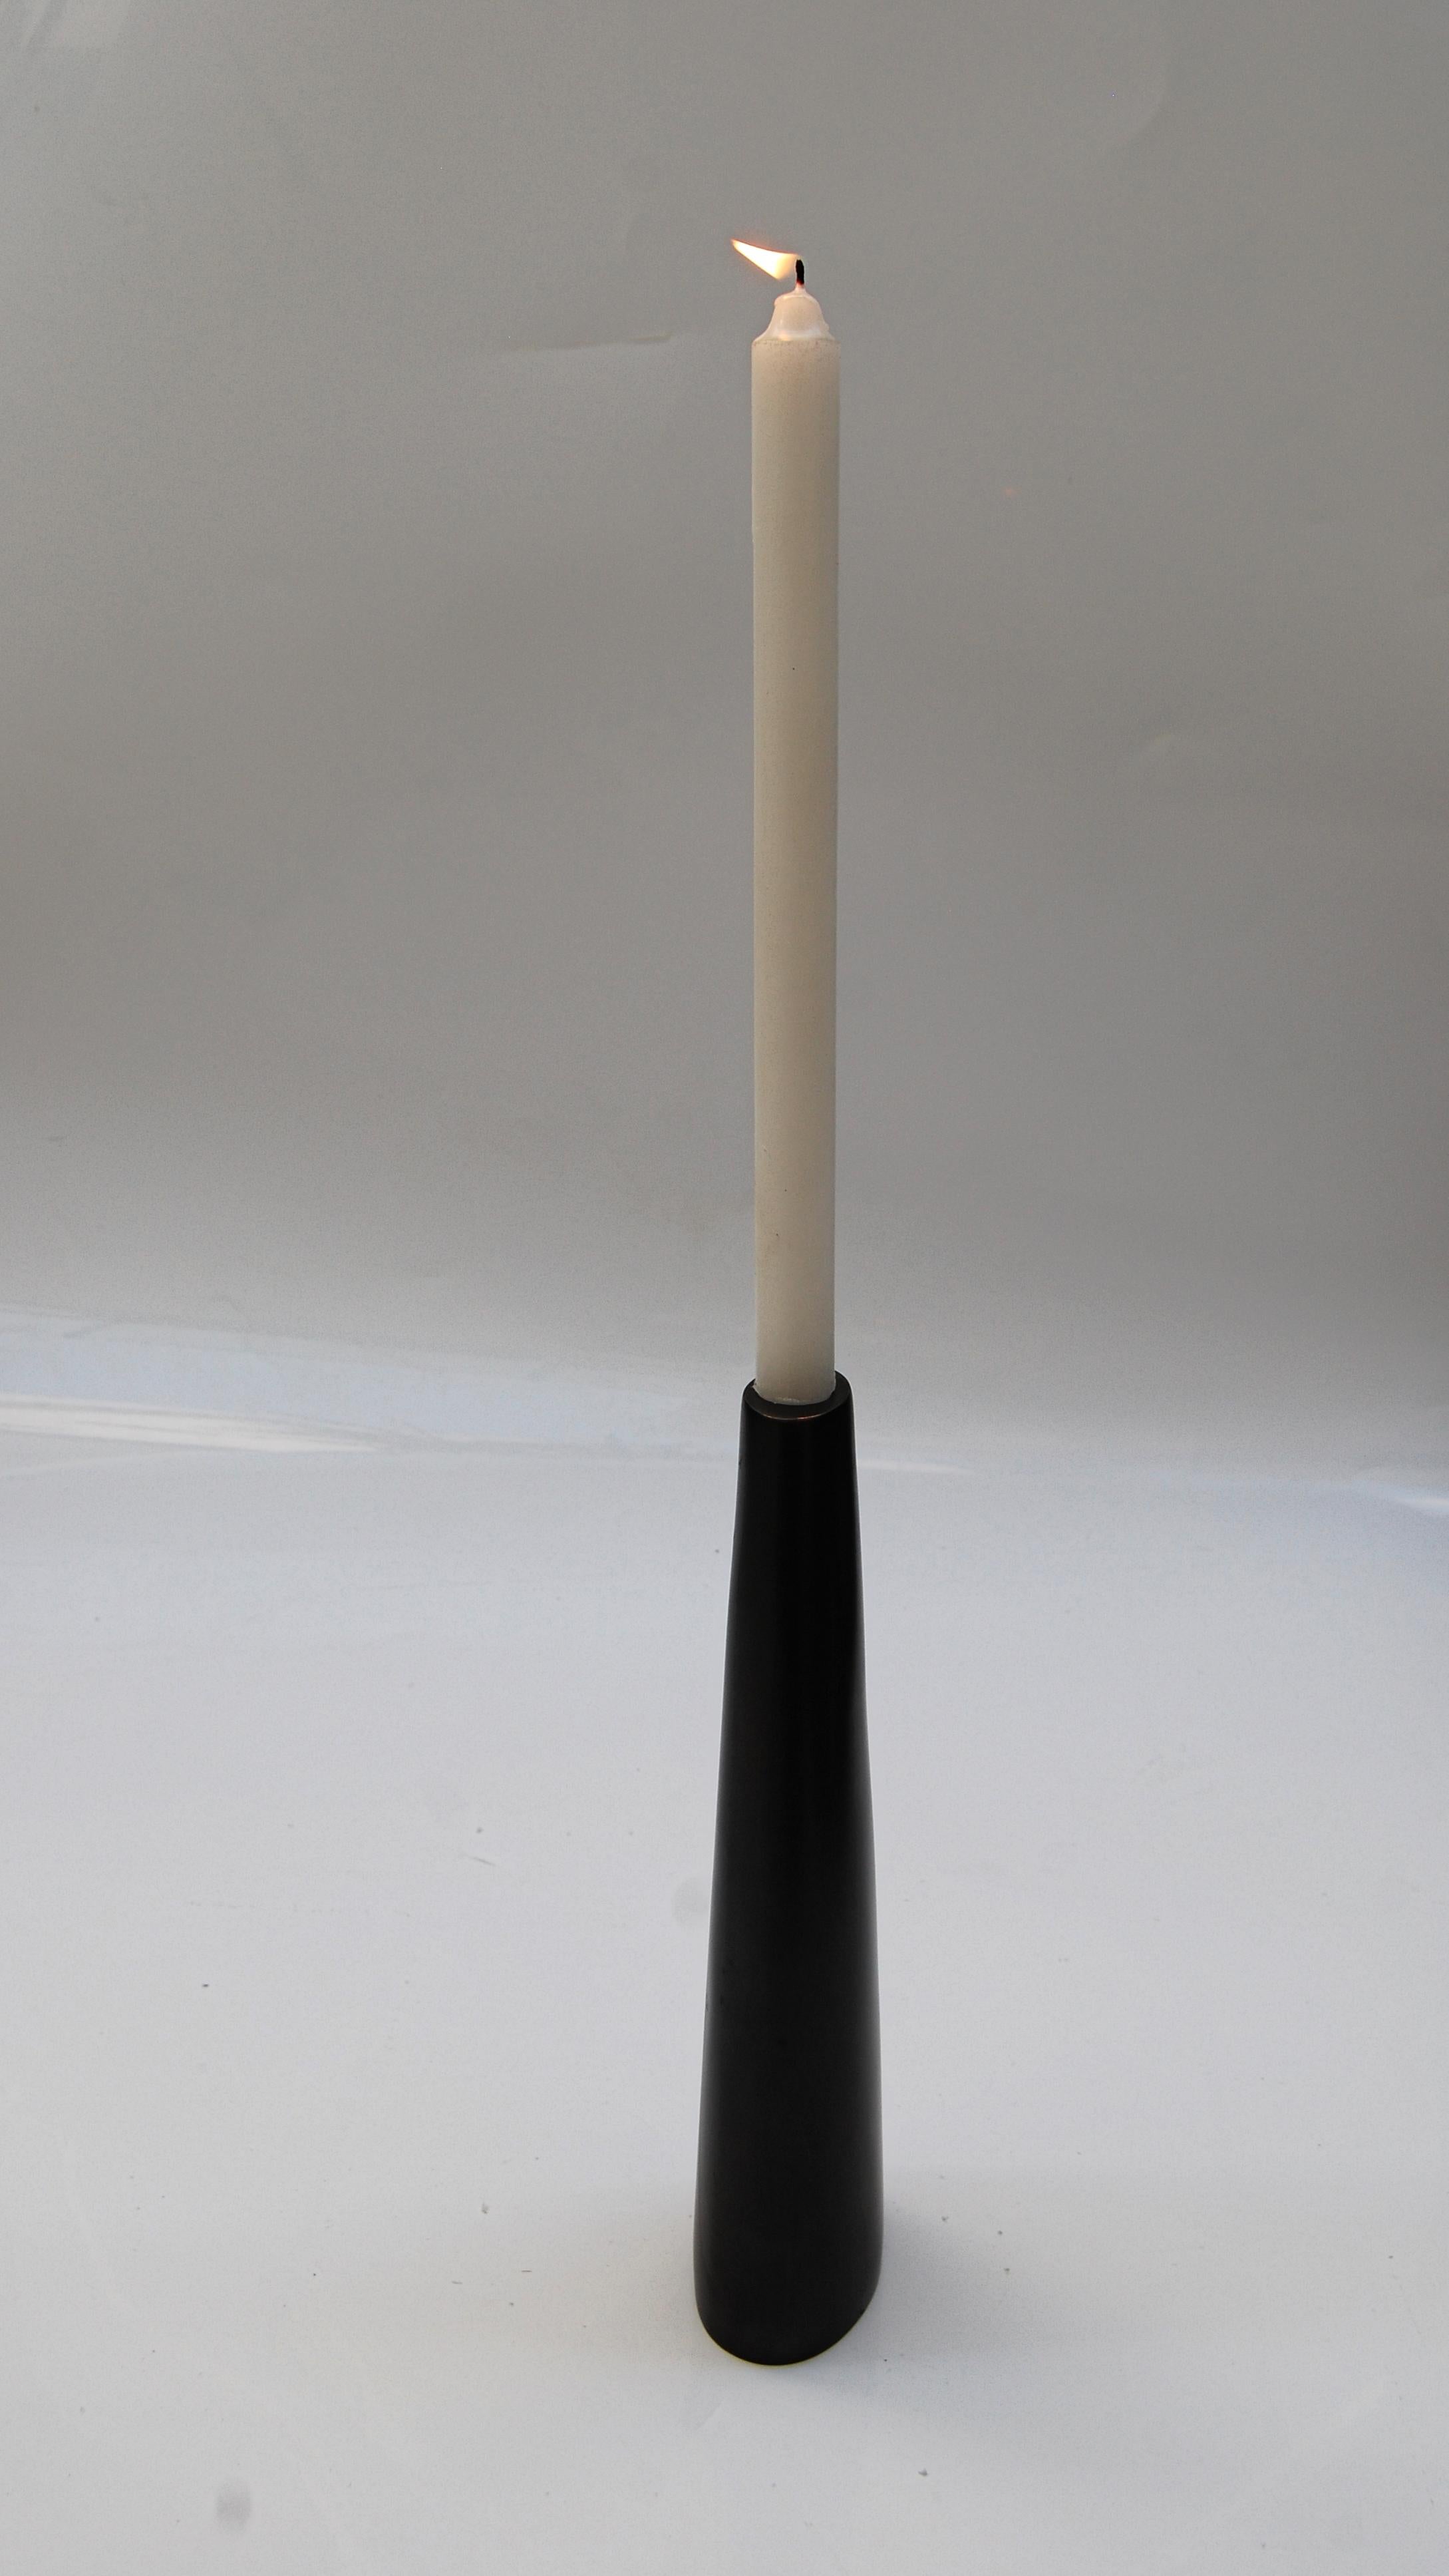 Dark bronze candleholder by FAKASAKA Design.
Dimensions: W 9.5 x D 5.5 x H 29.5 cm.
Materials: dark bronze.
 